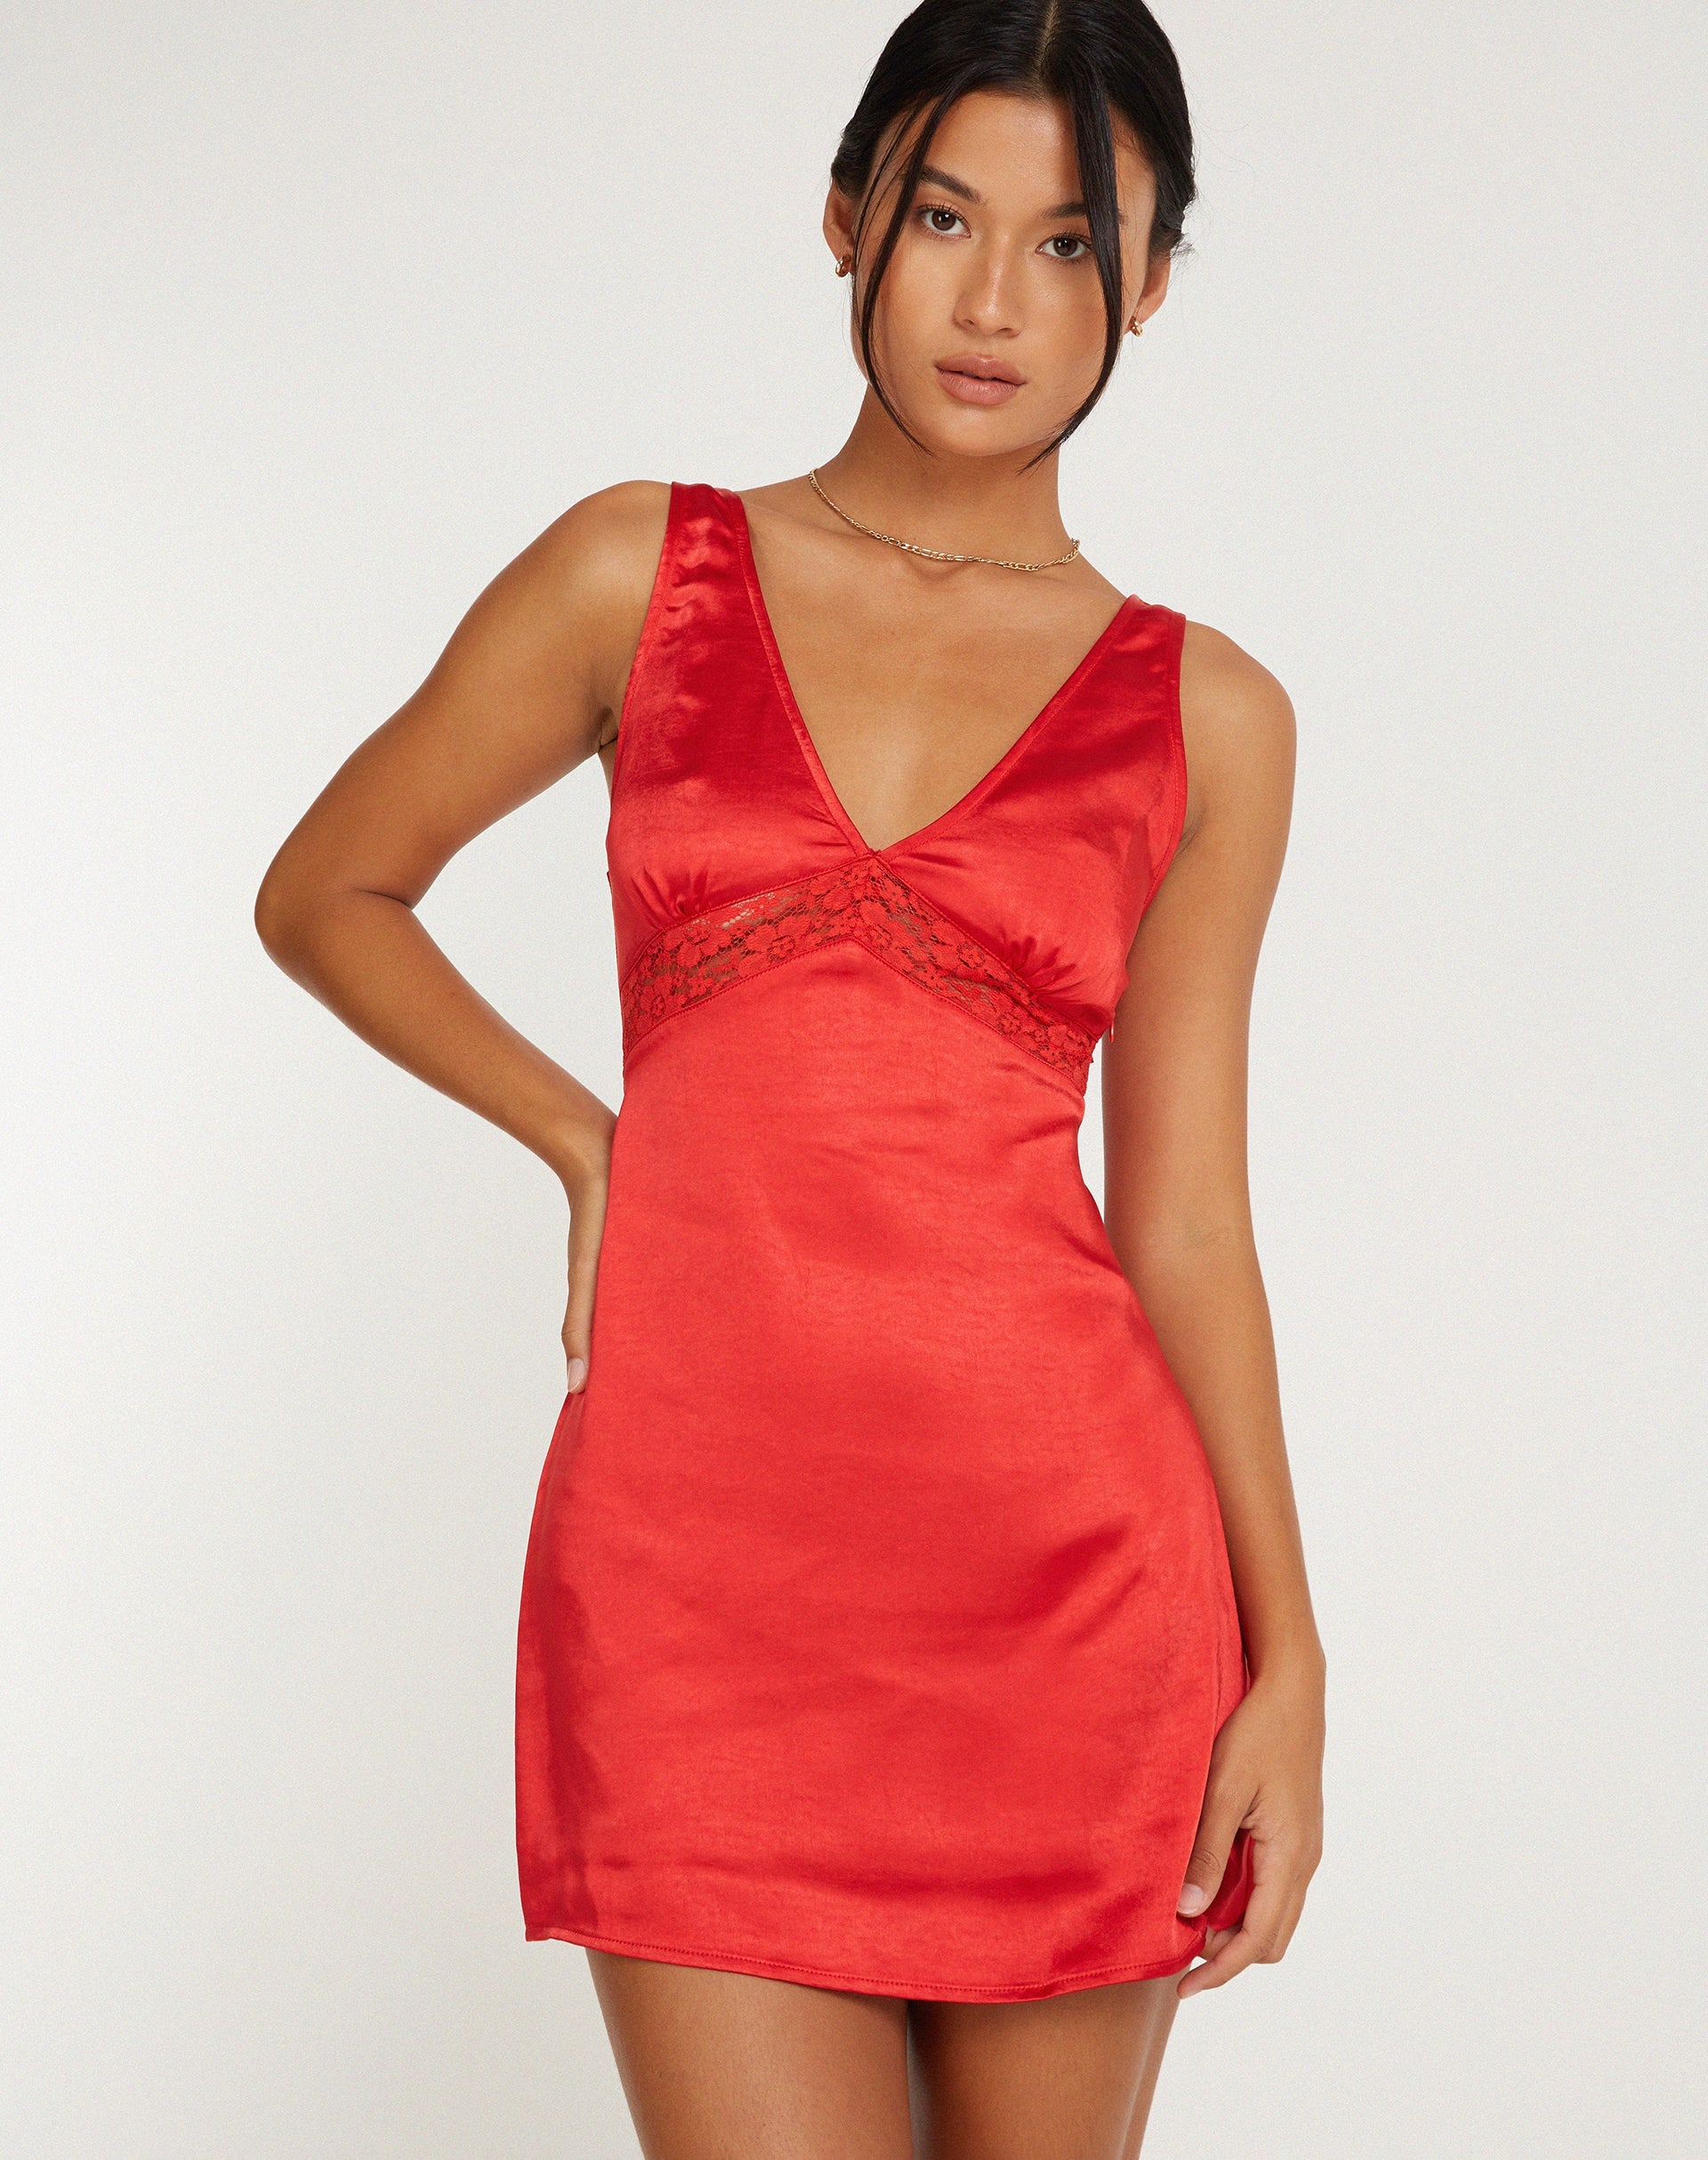 Lebby Mini Dress in Satin Red